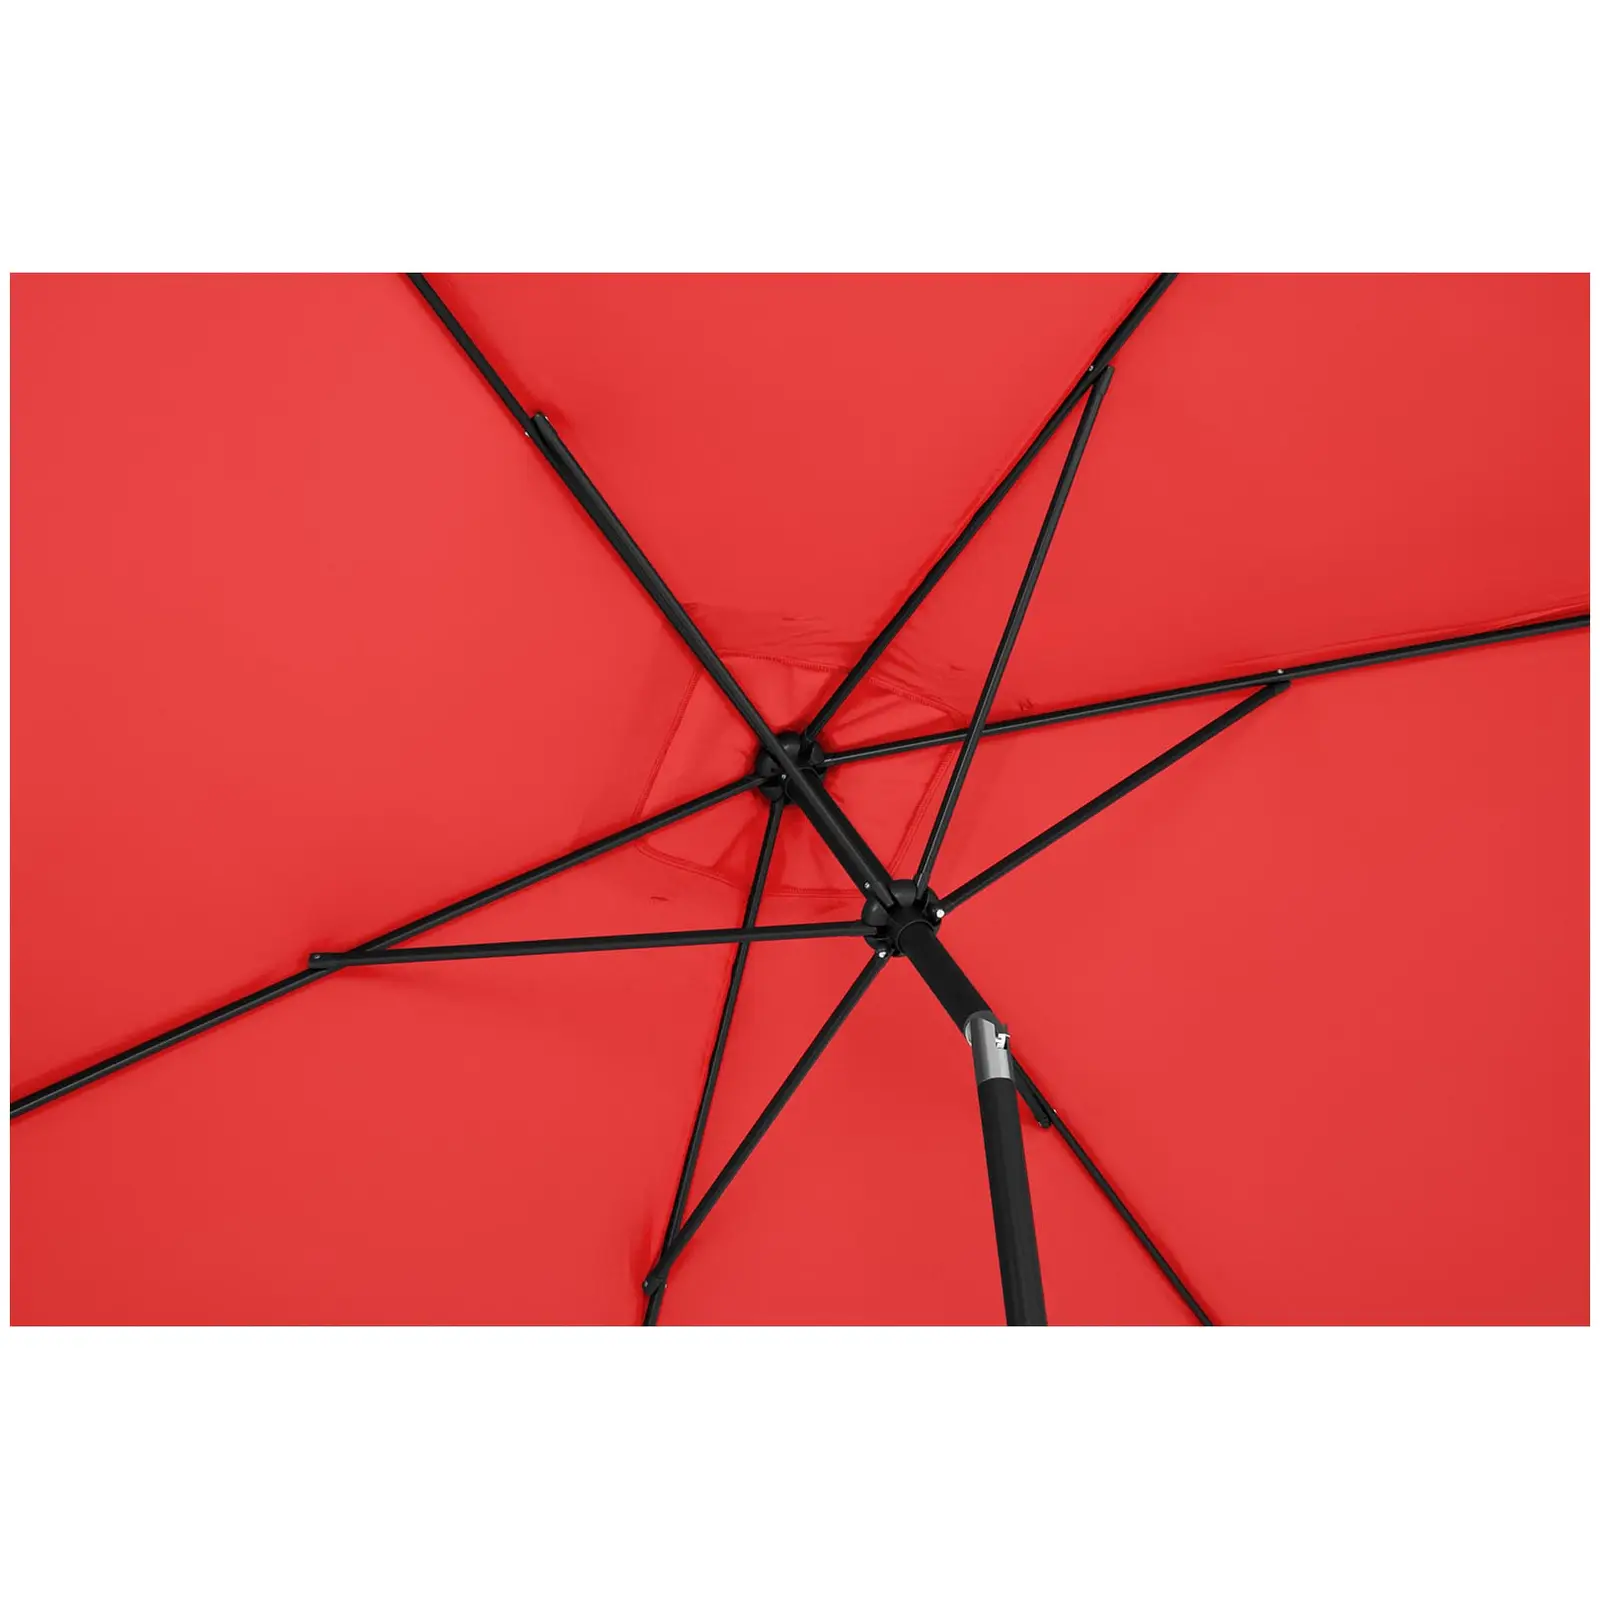 Factory second Large Outdoor Umbrella - red - rectangular - 200 x 300 cm - tiltable